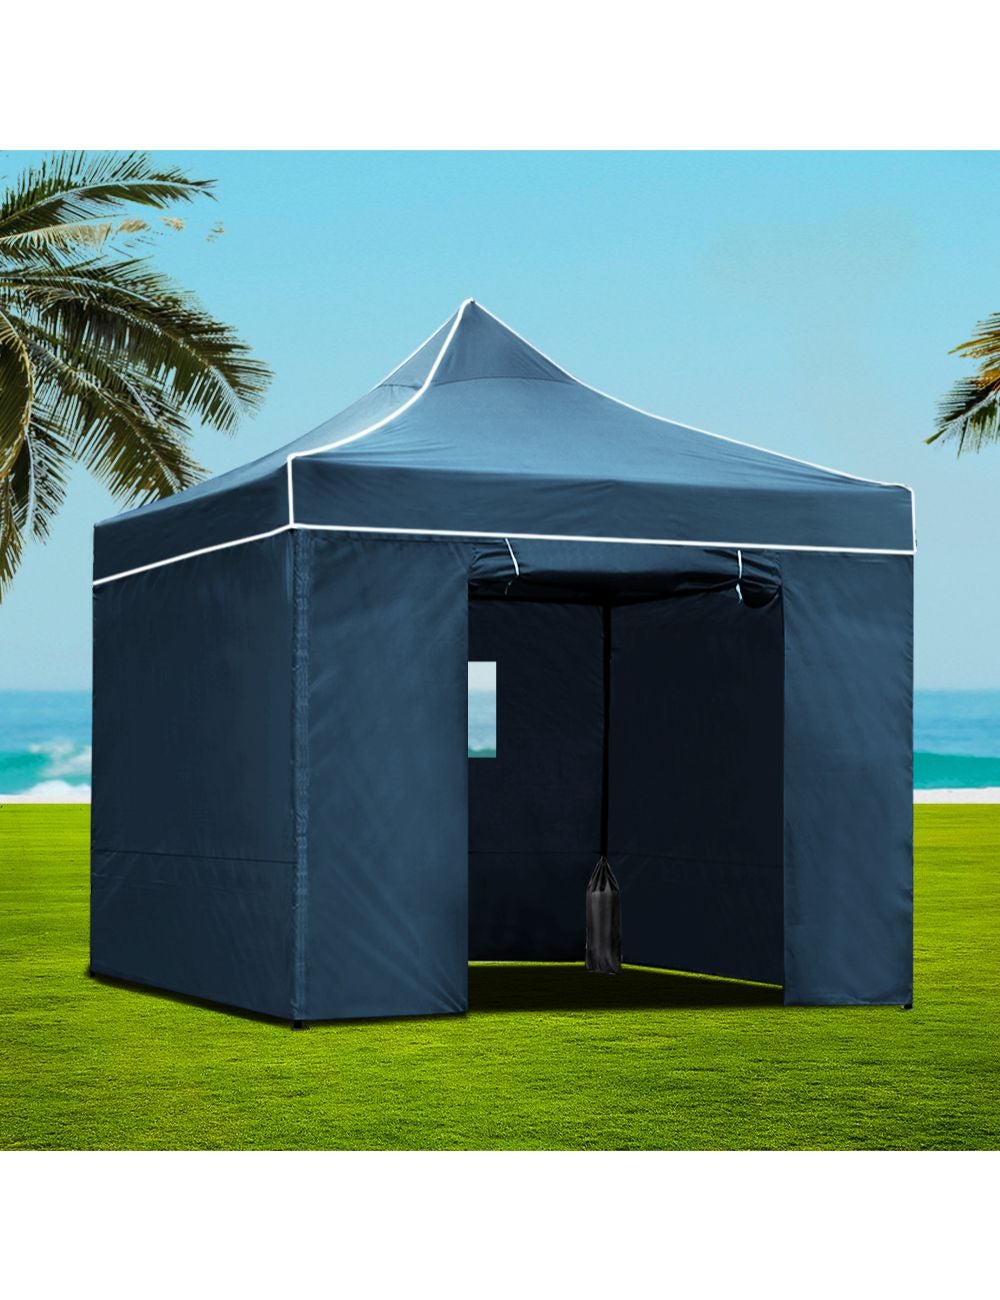 Instahut Gazebo Pop Up Marquee 3x3 Camping Gazebos Tent